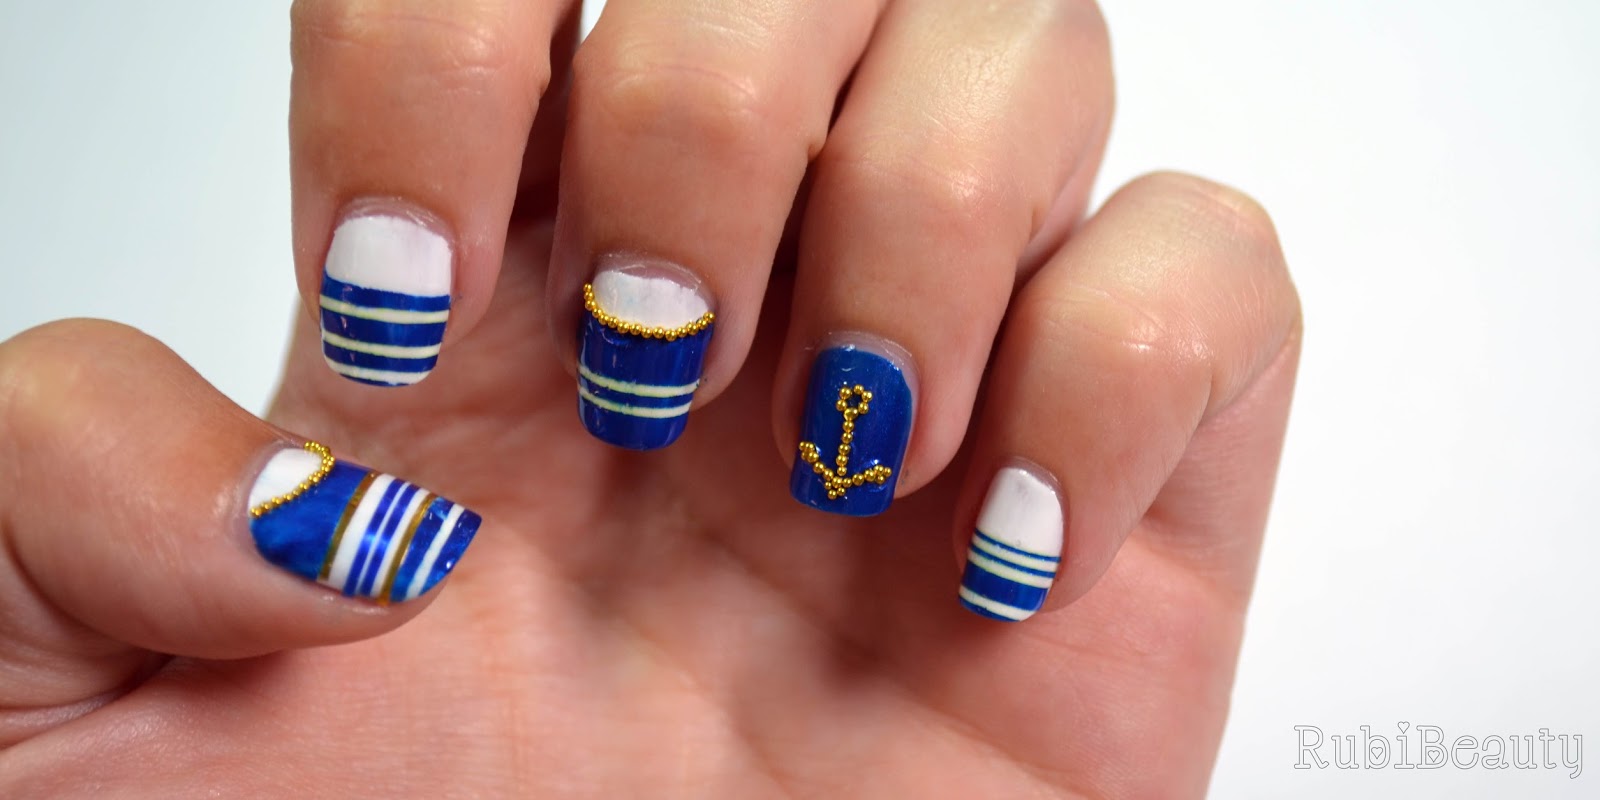 rubibeauty nail art diseño uñas design navy marinero It huelva